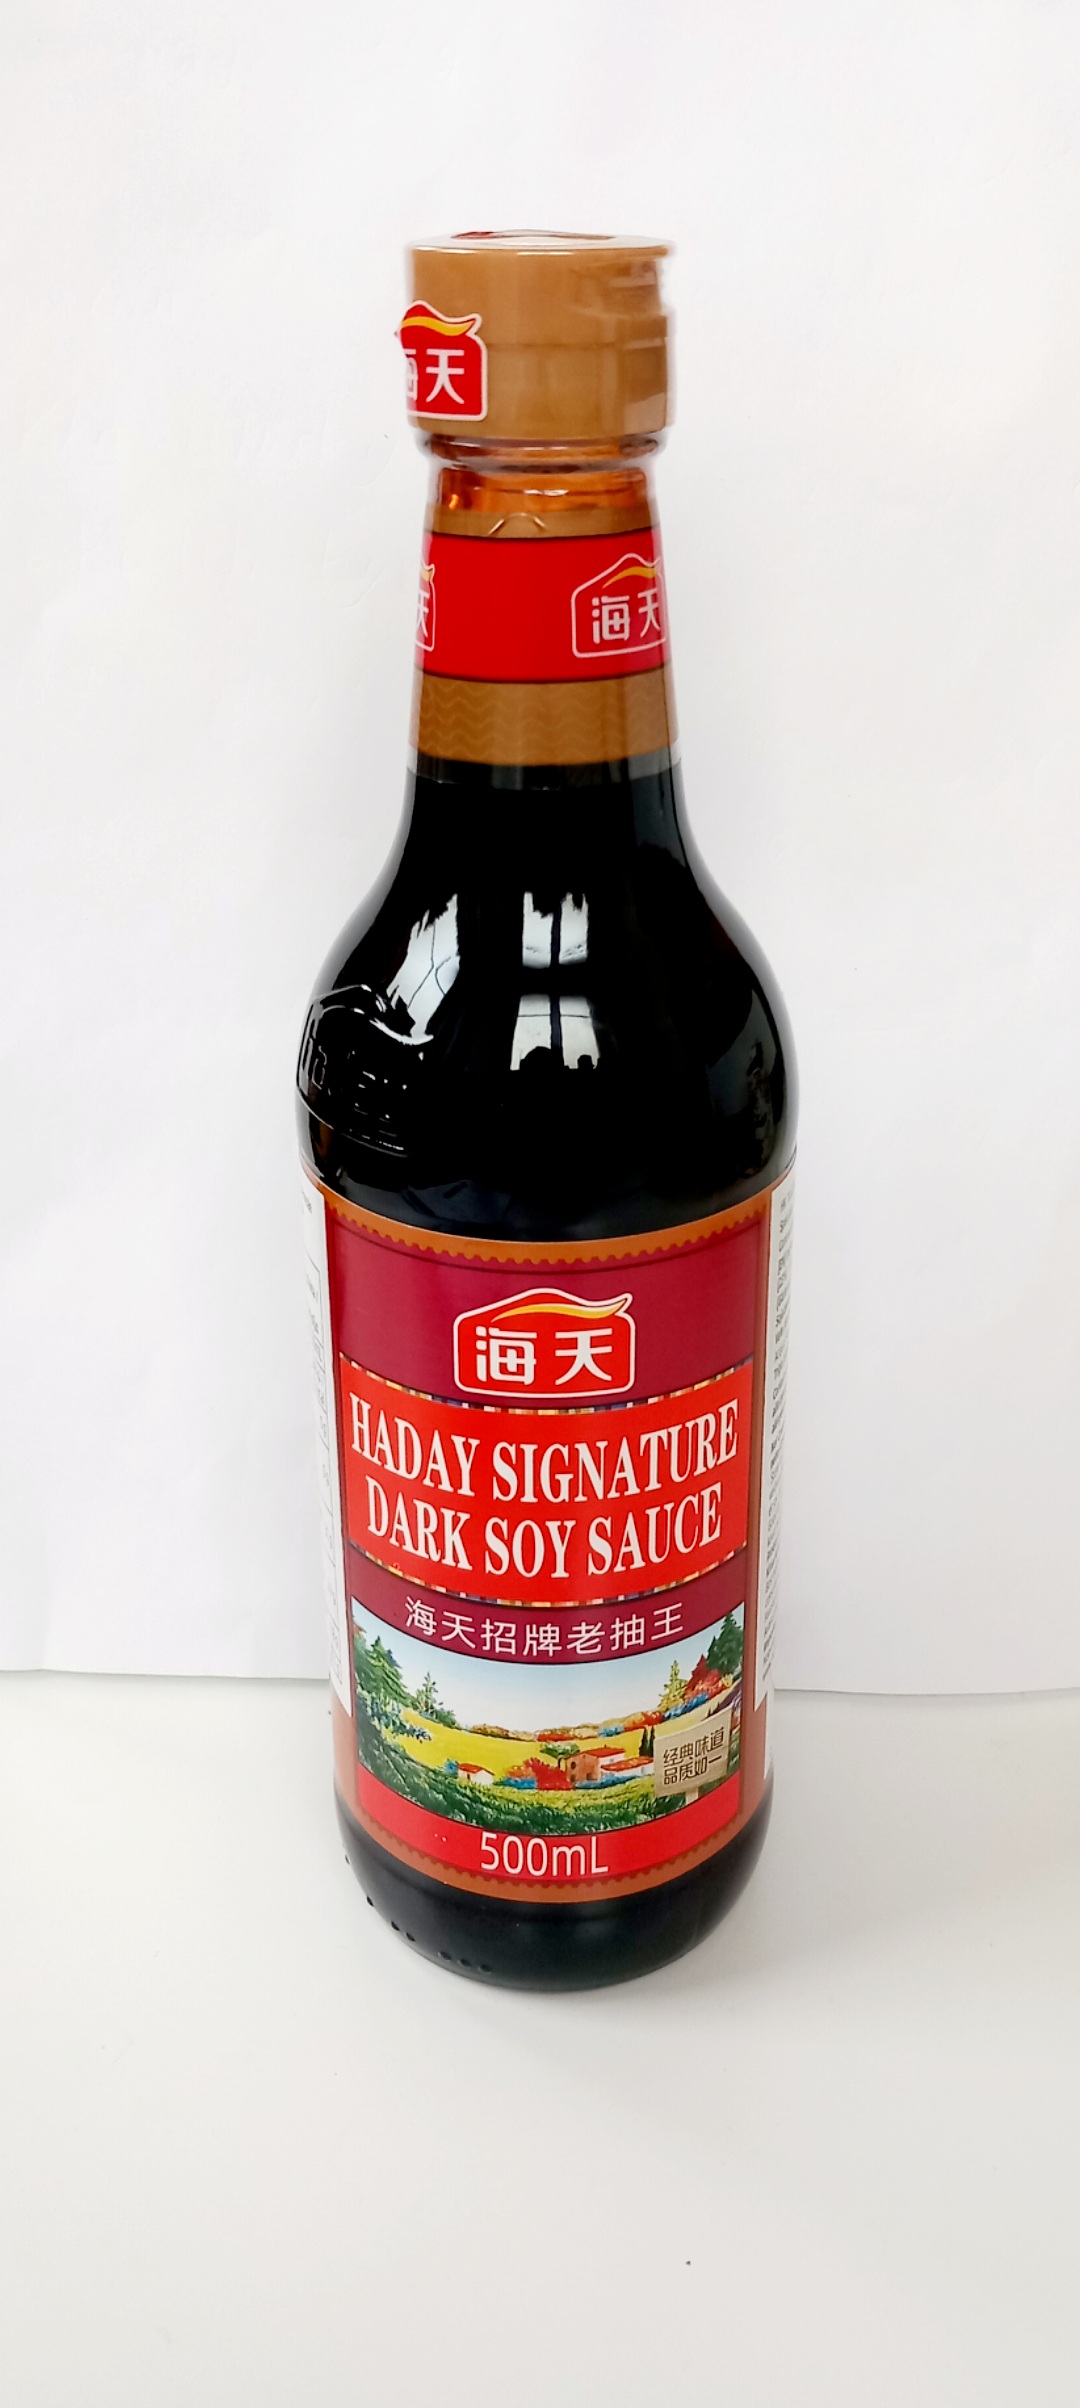 HK Dark Soy Sauce 500ml